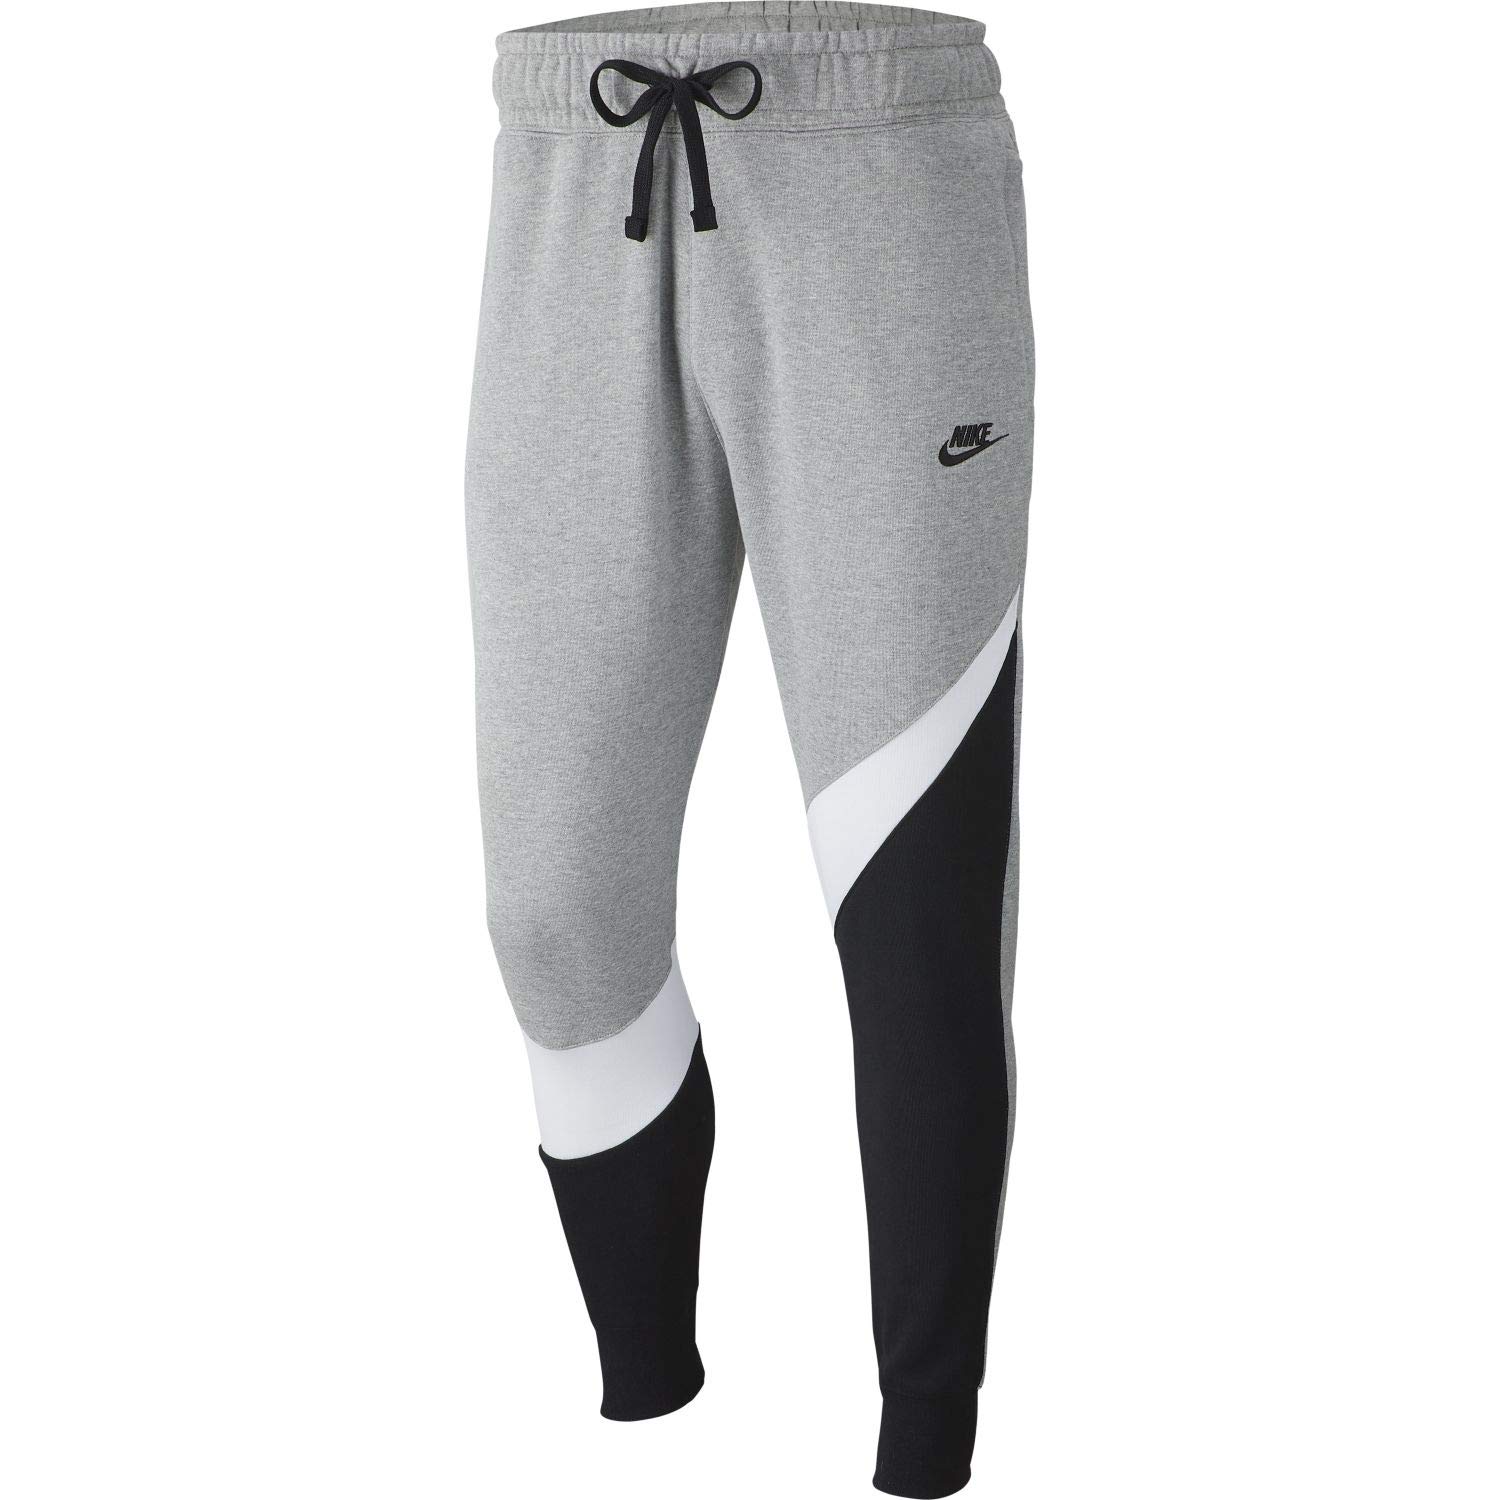 grey nike sweatpants with black zipper